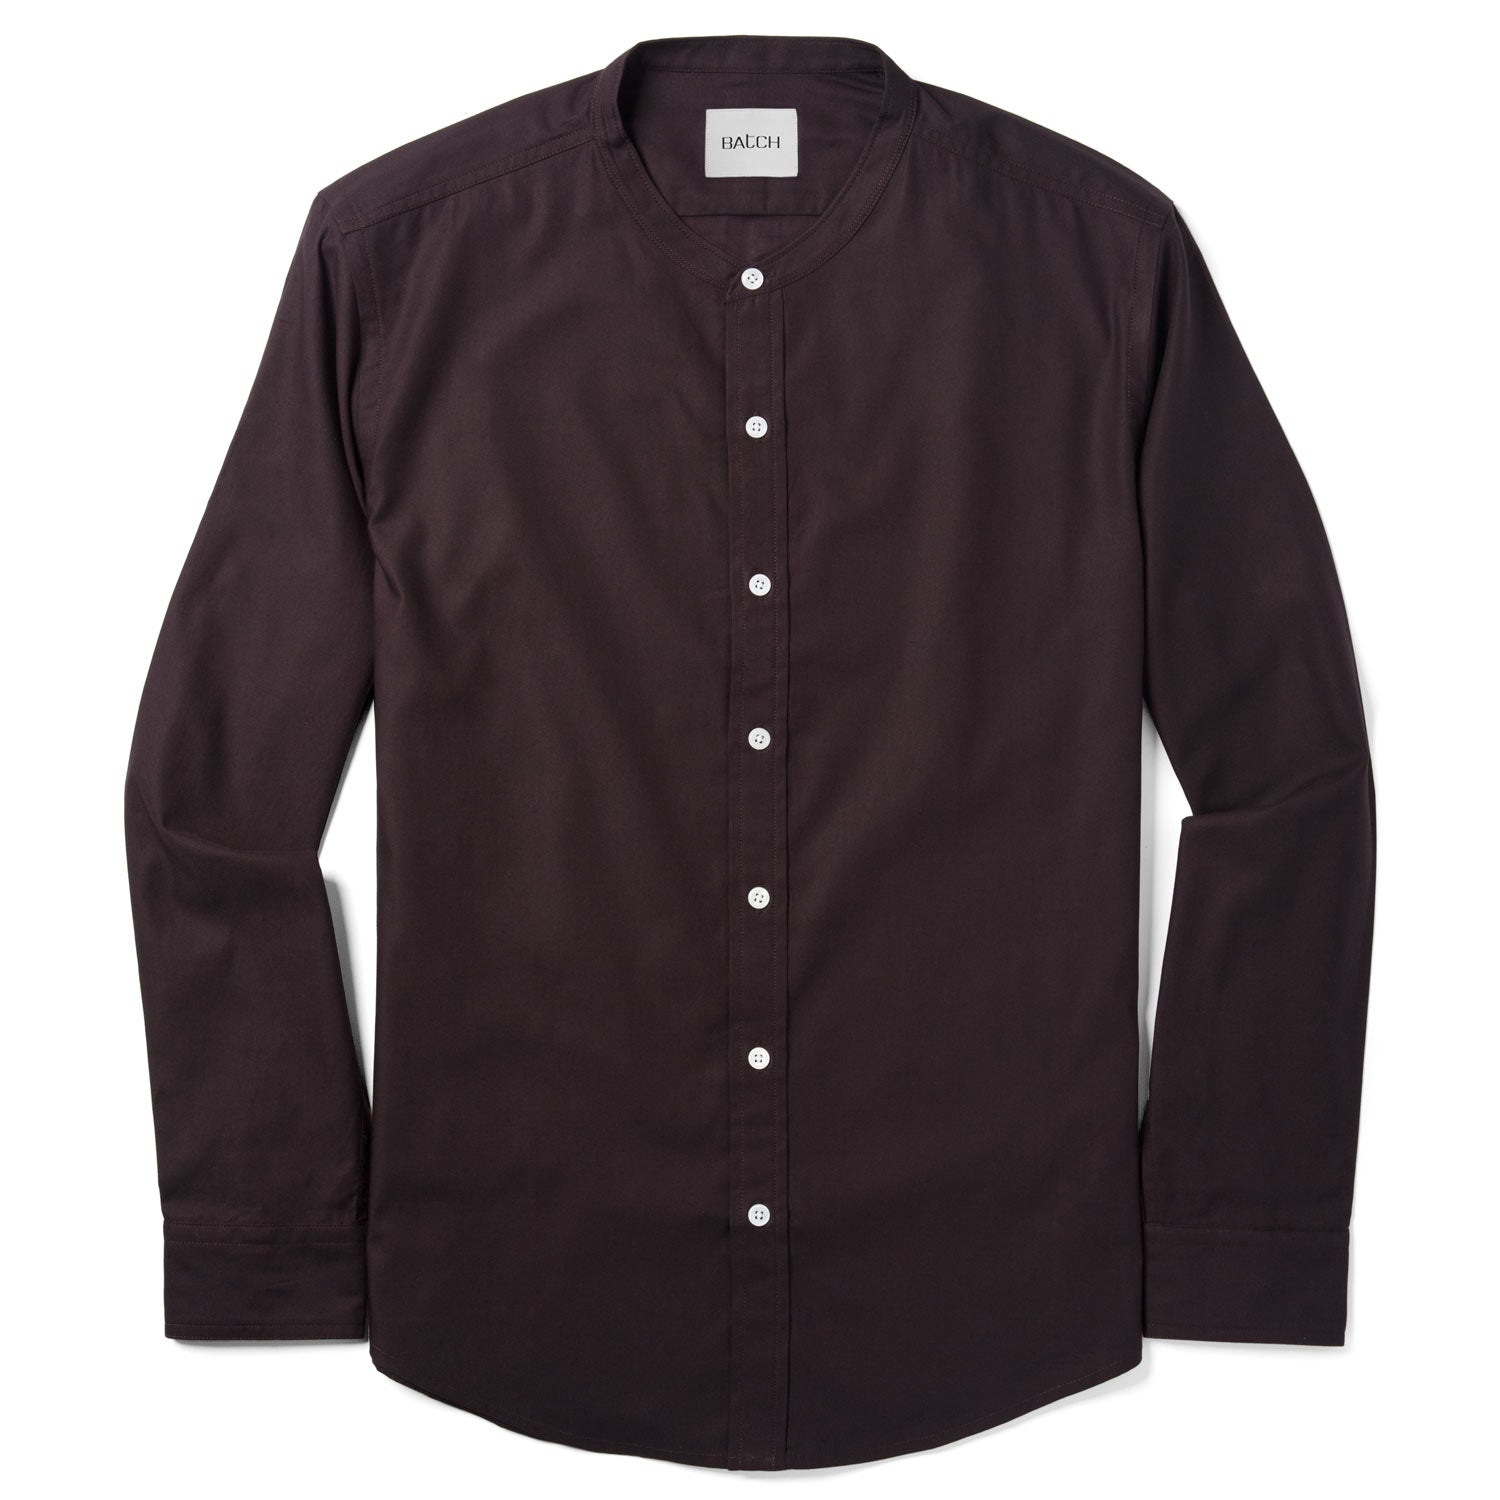 Men's Casual Band-Collar Button Down Shirt Dark Burgundy Cotton